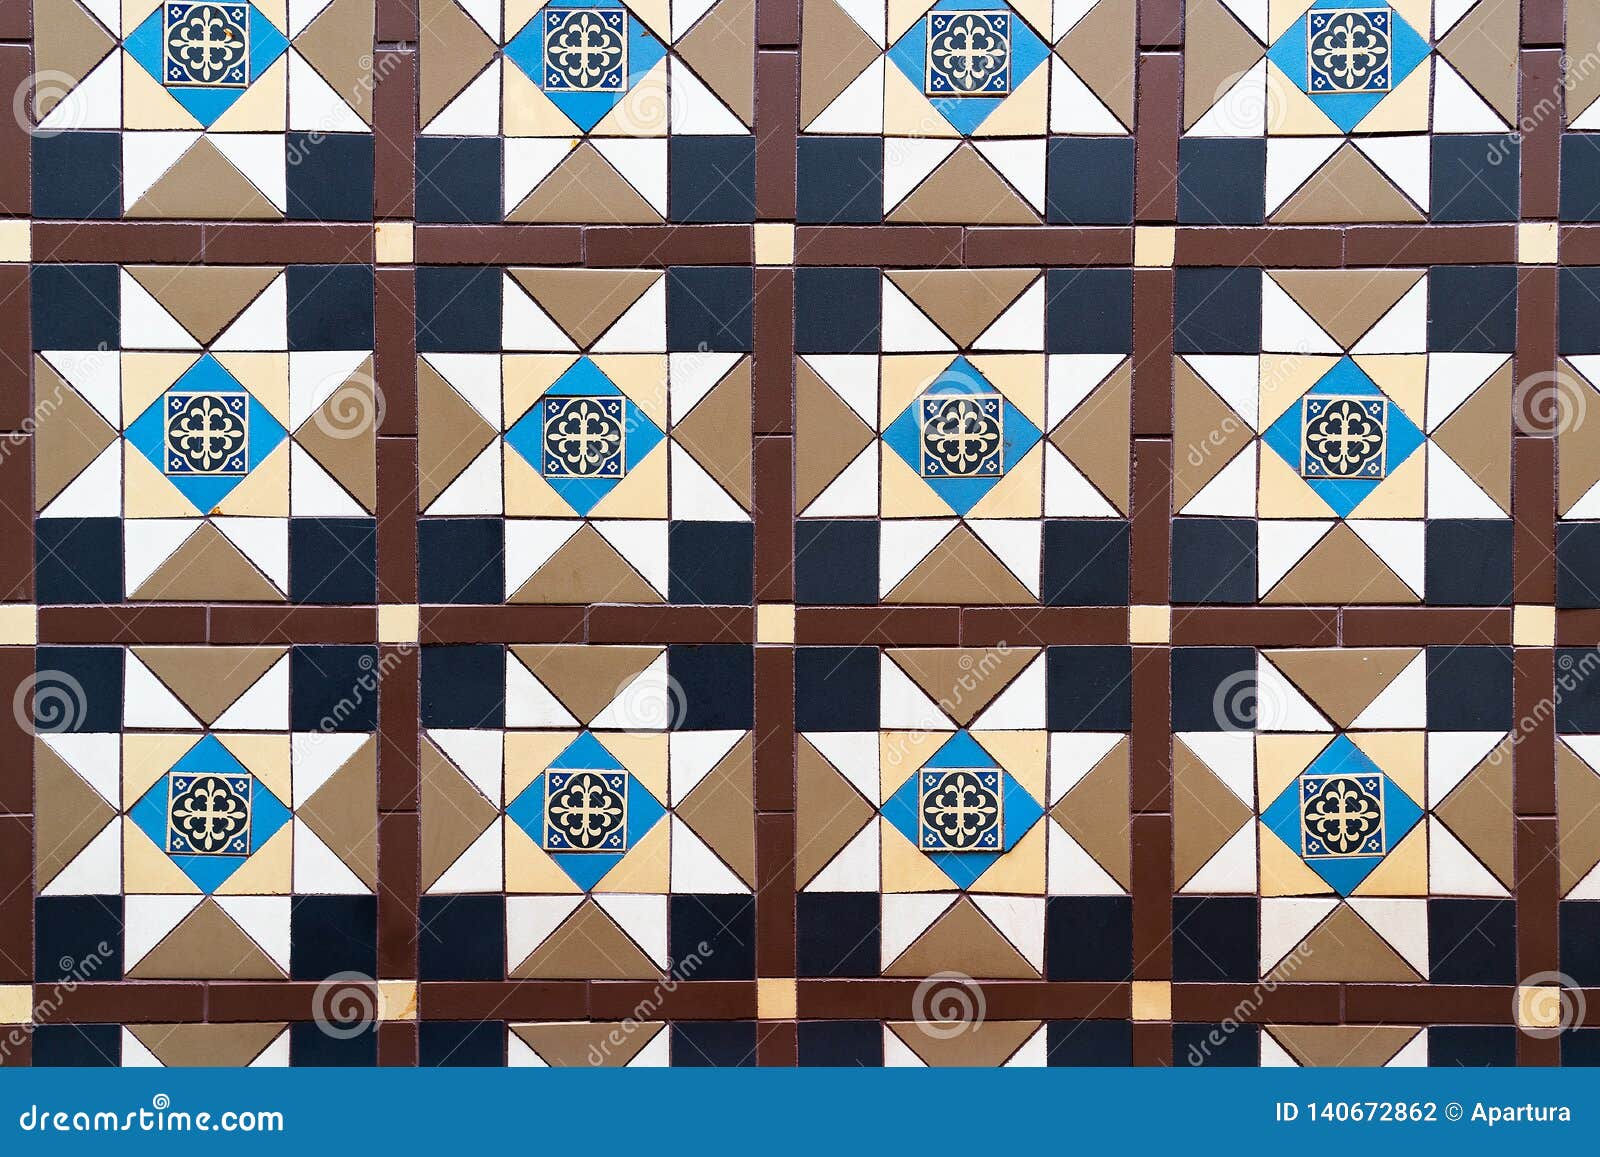 Brown Blue Combination Square Mosaics Bathroom Wall Tiles